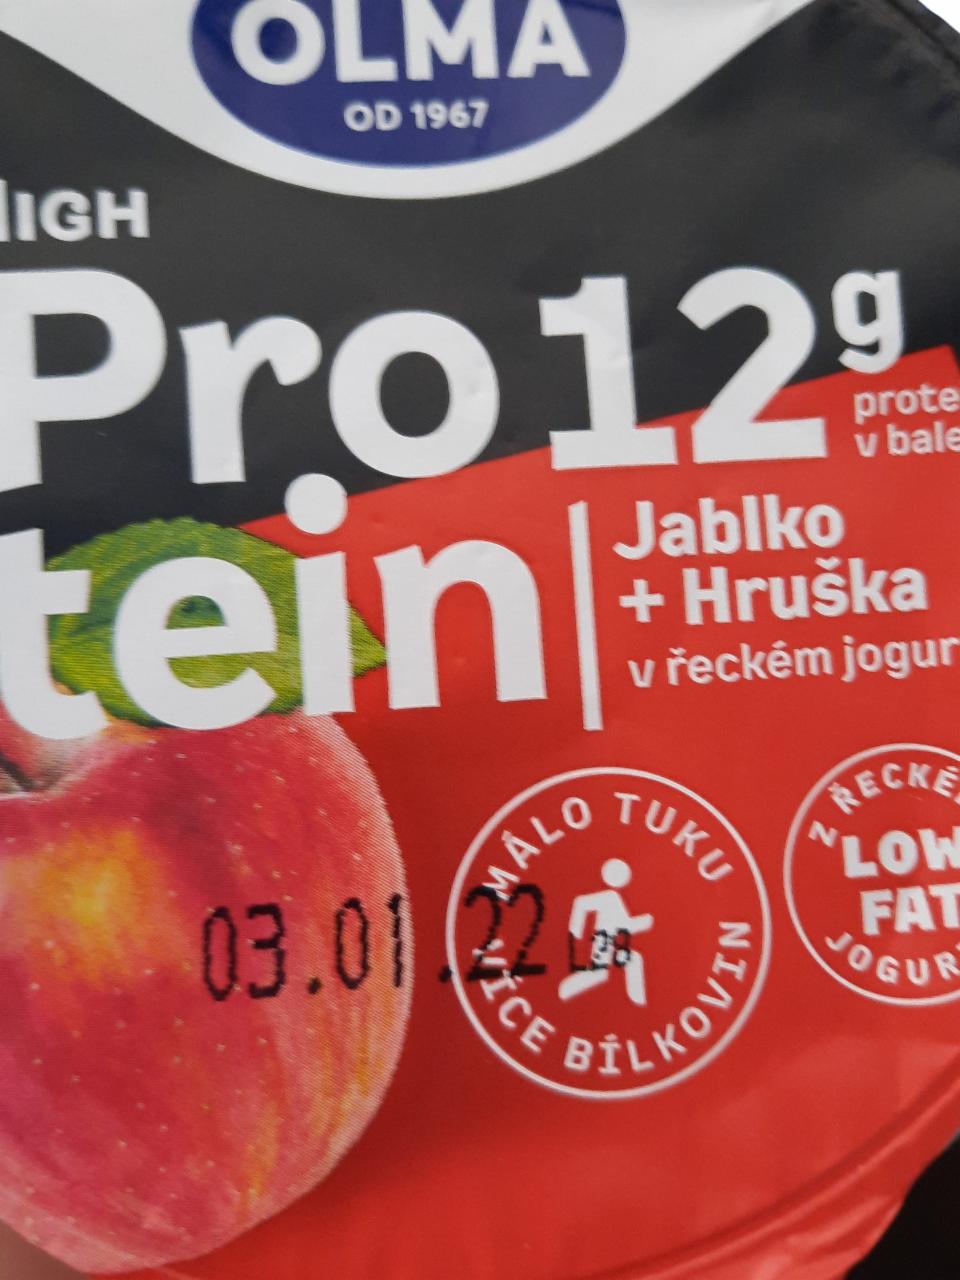 Fotografie - High Protein 12g Jablko+Hruška v řeckém jogurtu Olma